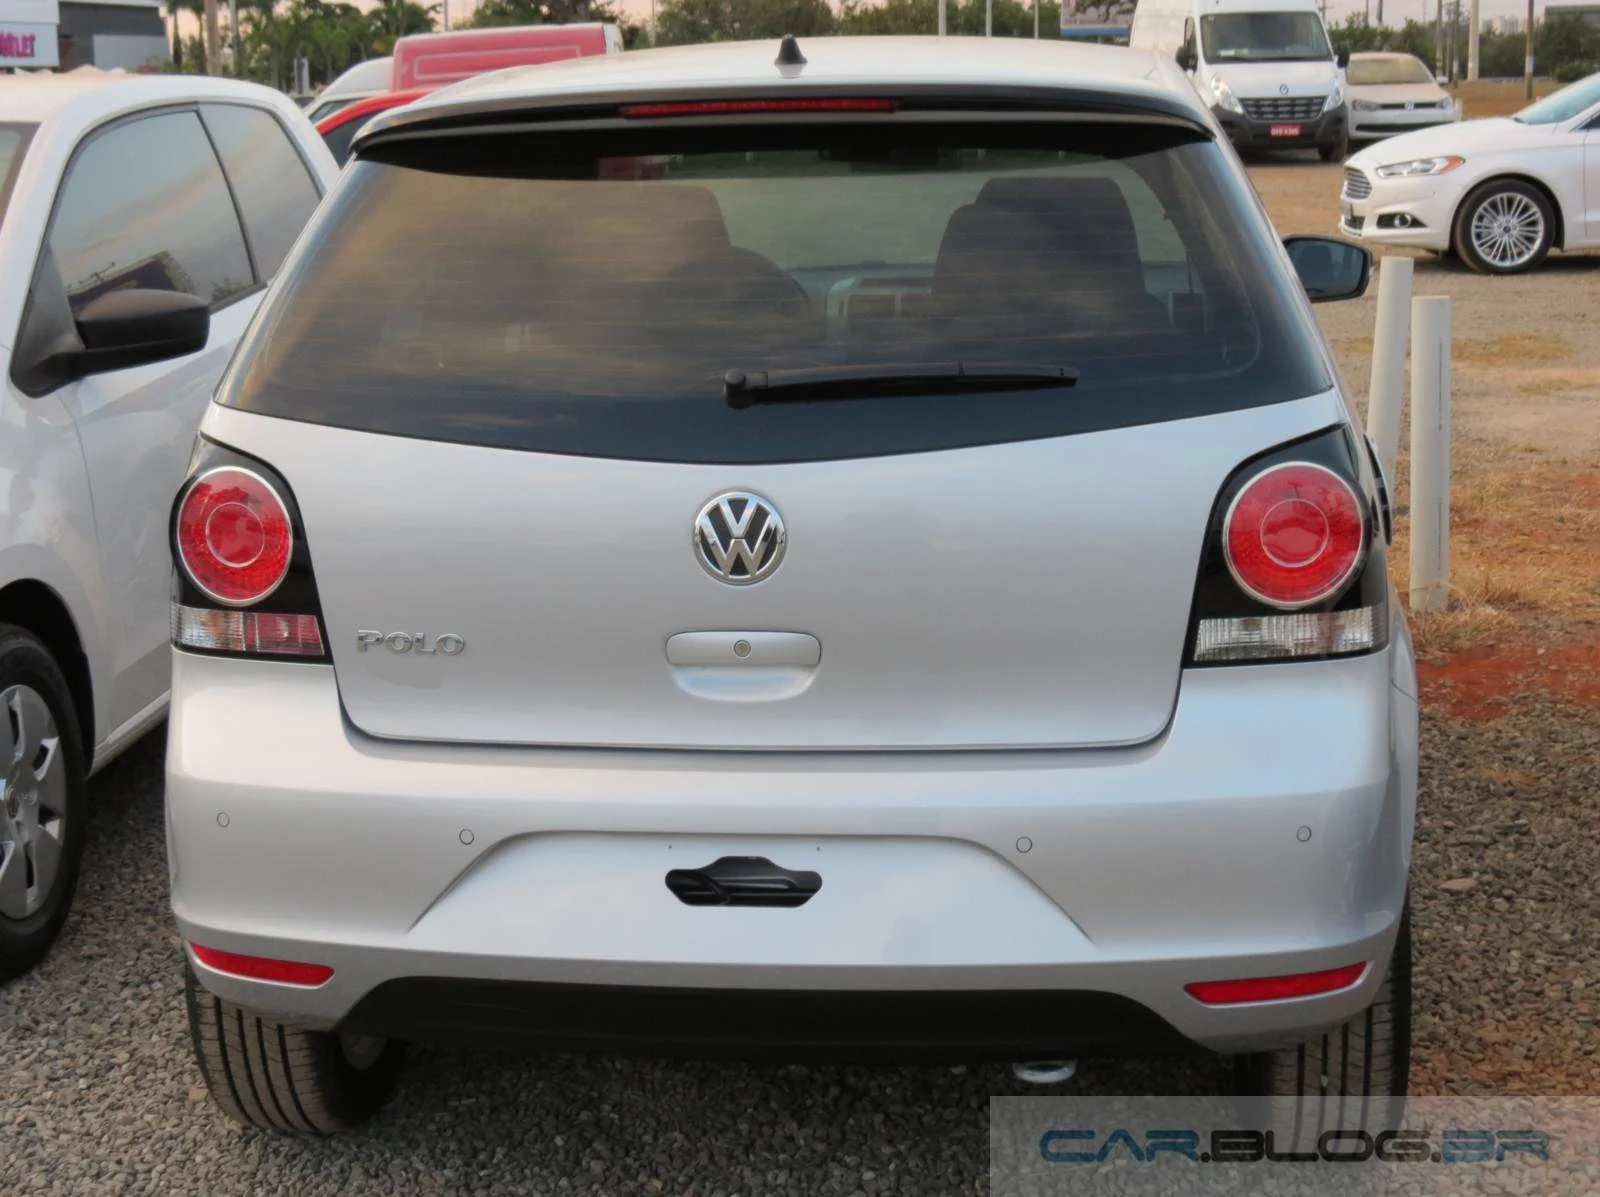 VW Polo Sportline 2015